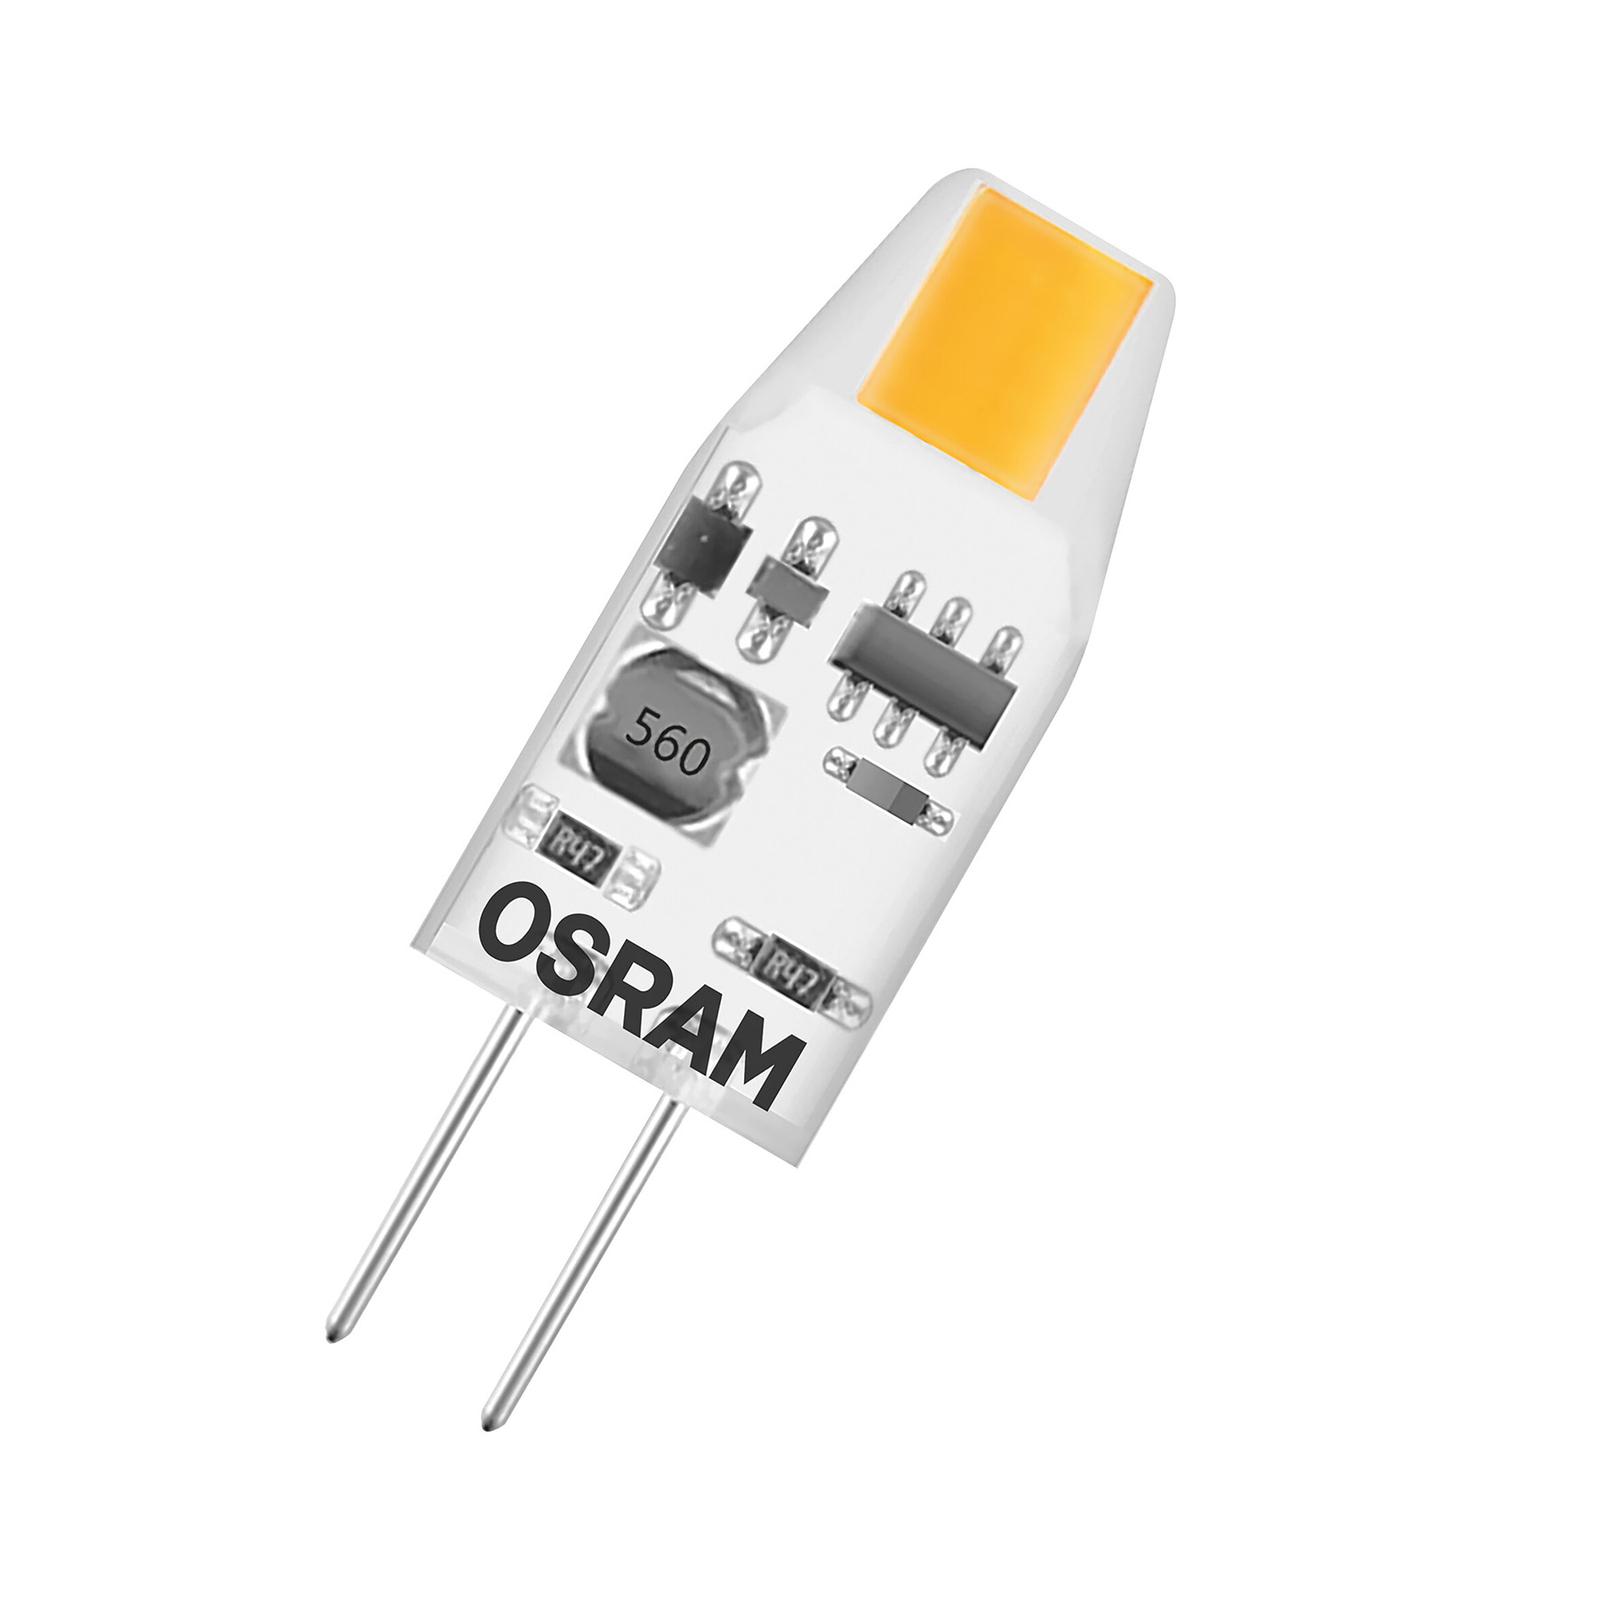 OSRAM PIN Micro LED s kolíkom G4 1W 100 lm 2 700 K